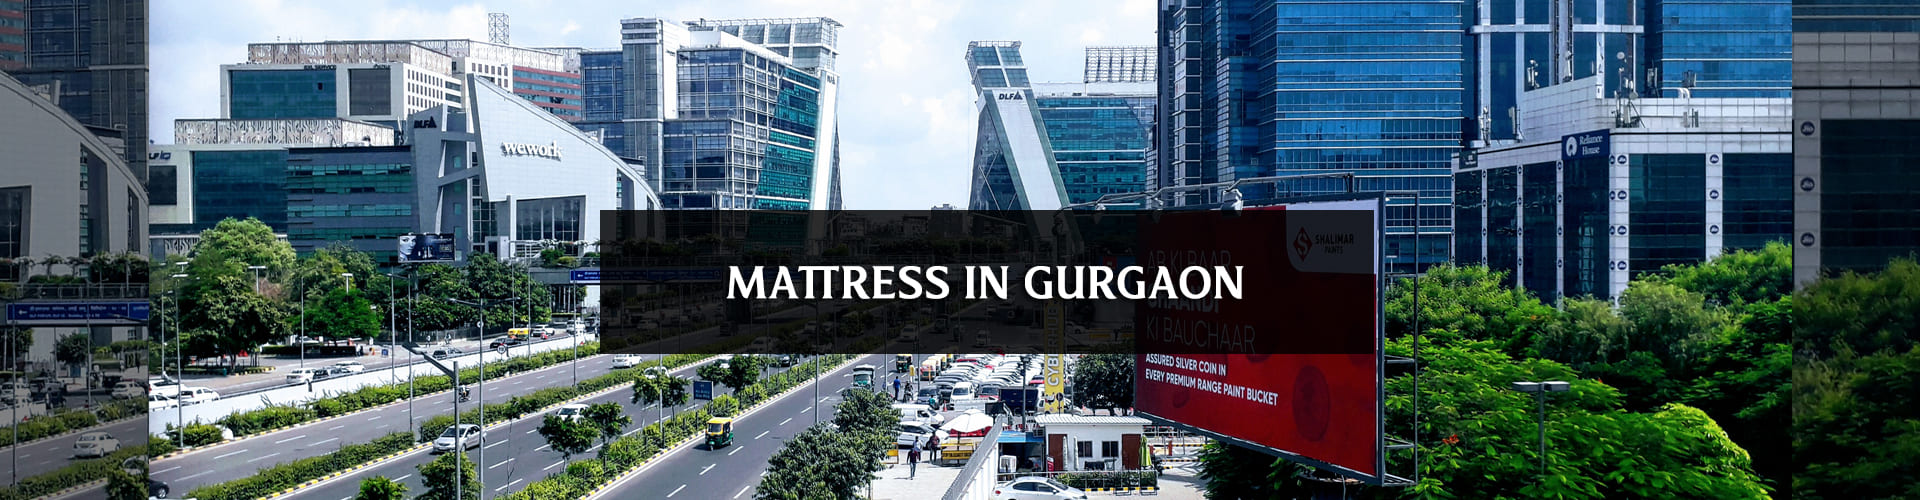 Buy mattresses online in gurgaon